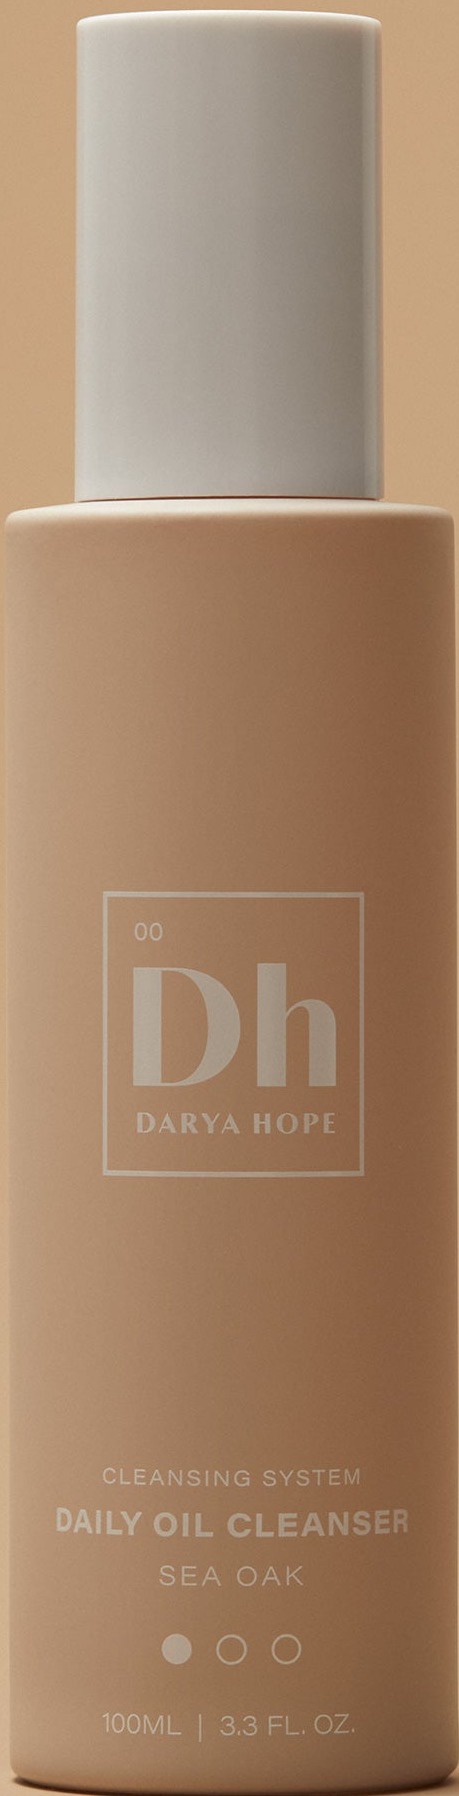 DARYA HOPE Oil Cleanser